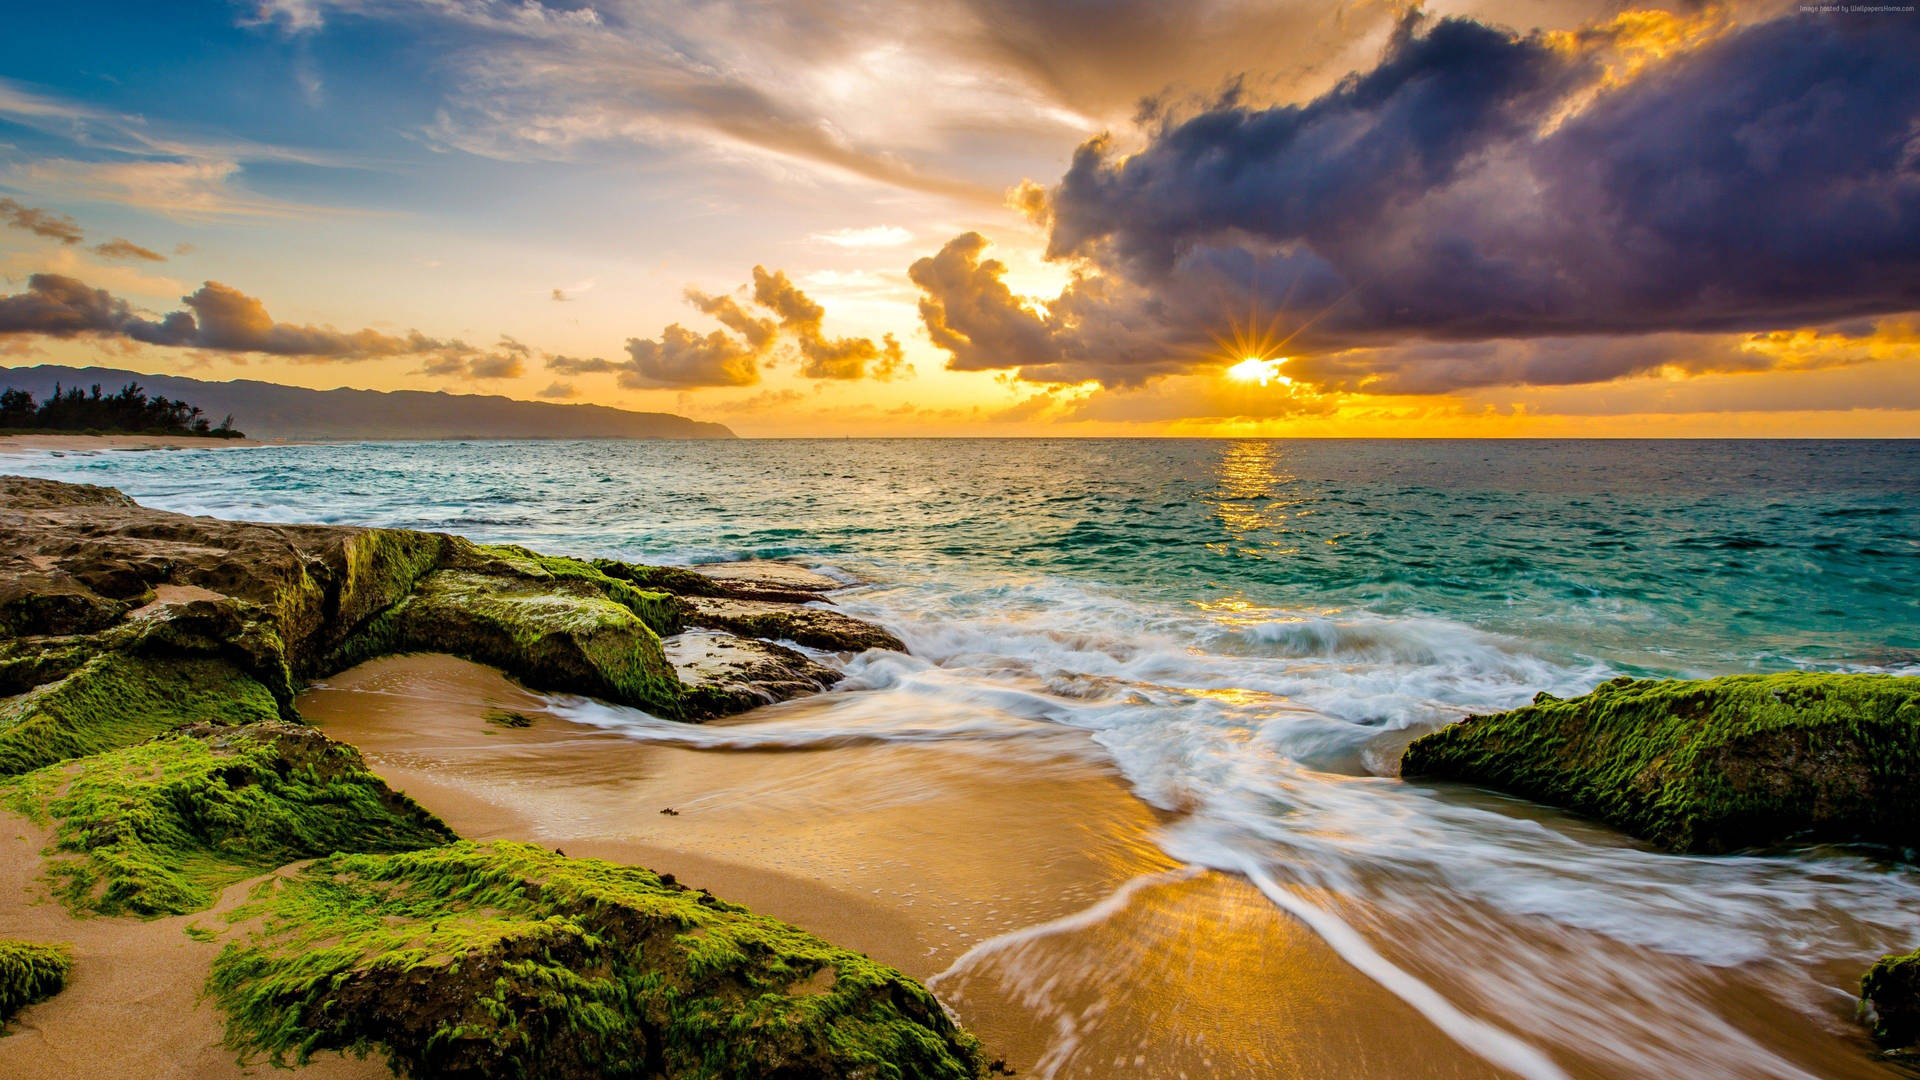 Caption: Serene Sunset At The Beach Wallpaper